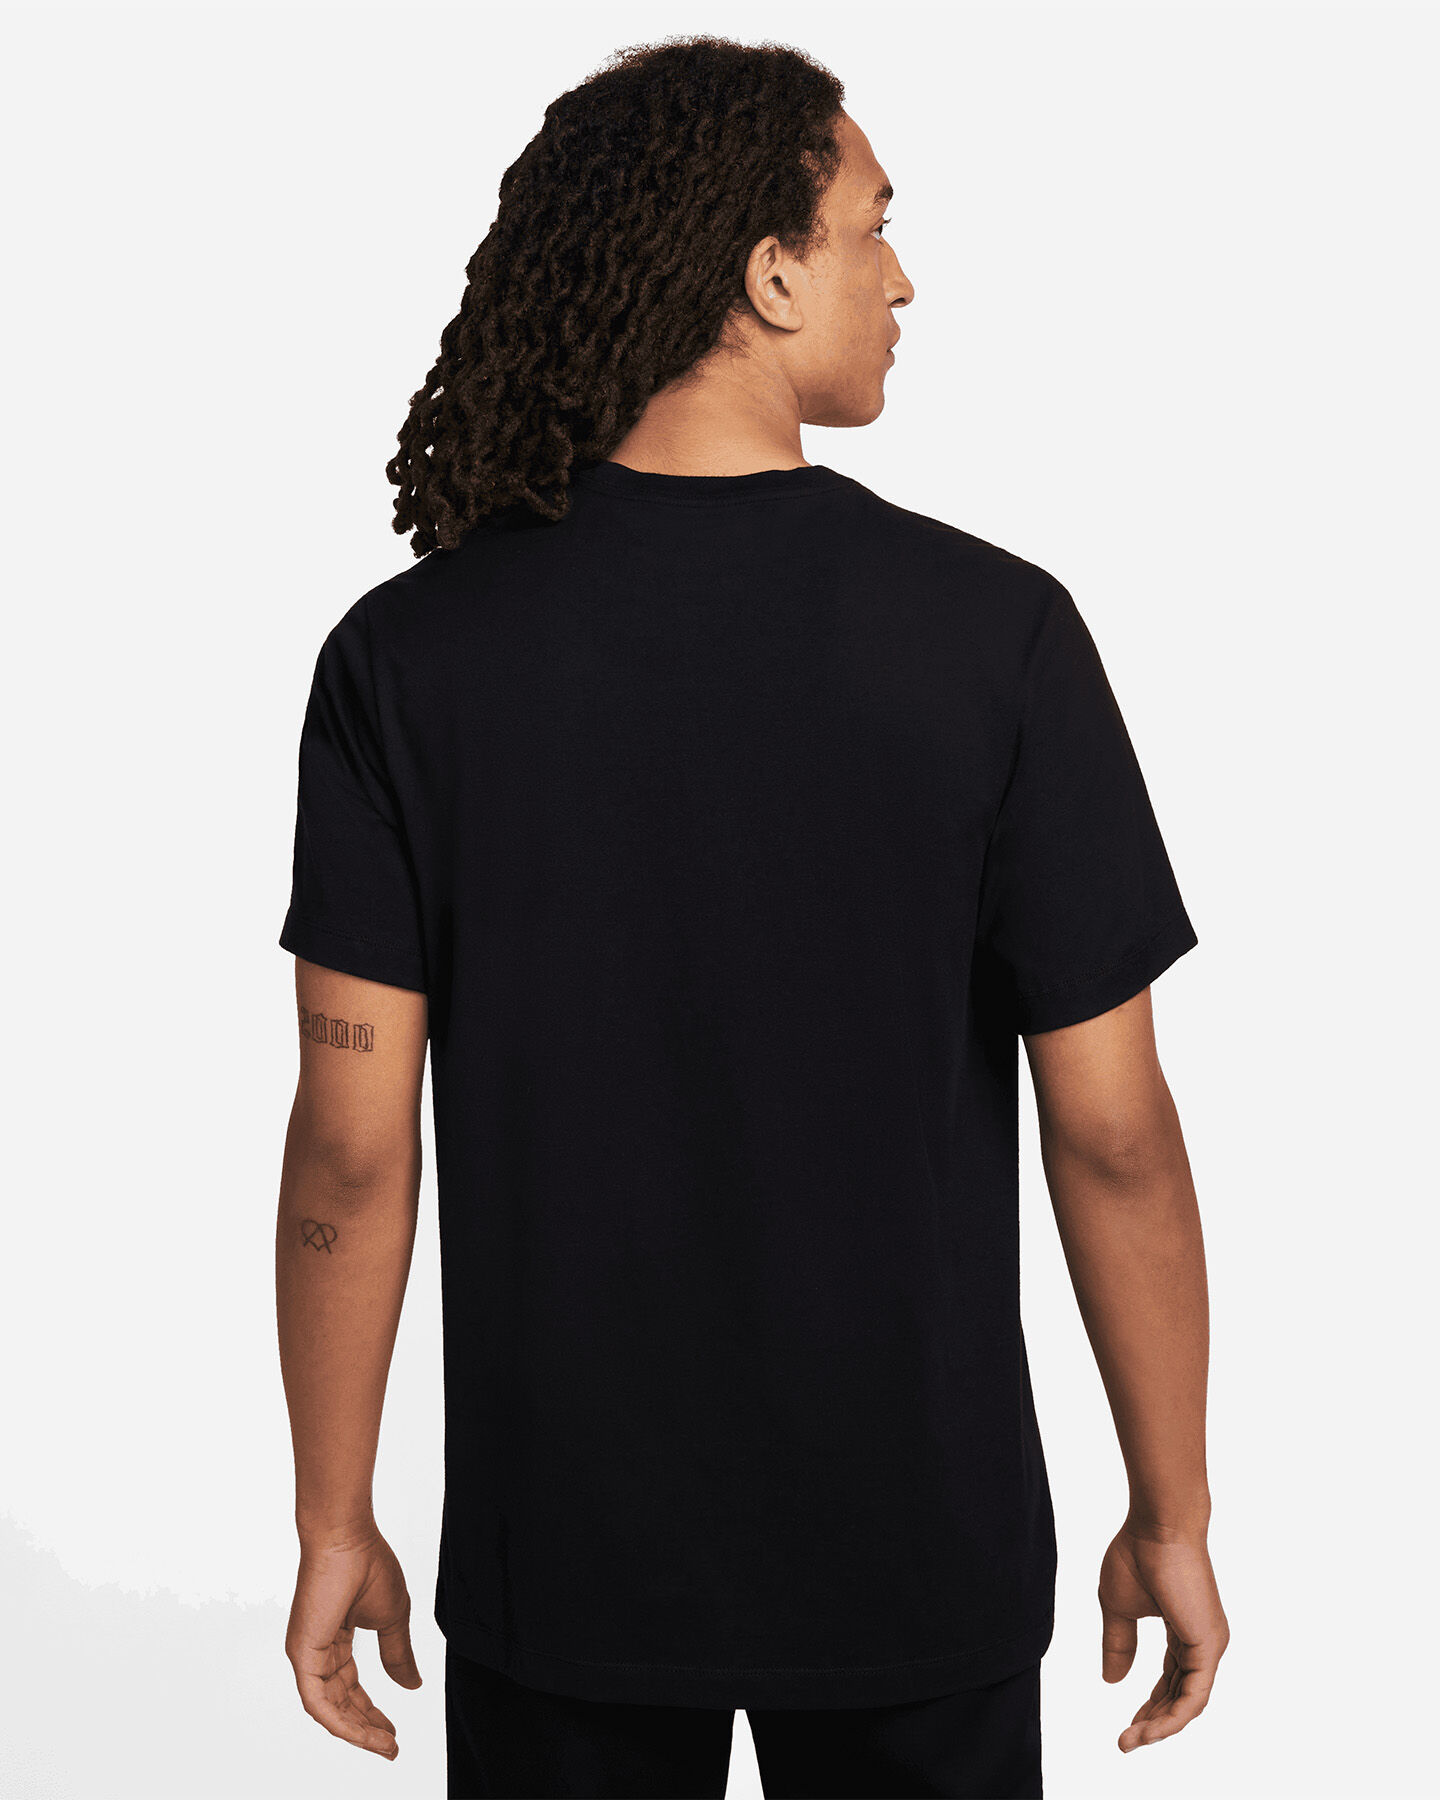  T-Shirt NIKE HIBRYD STATEMENT M S5495133 scatto 1